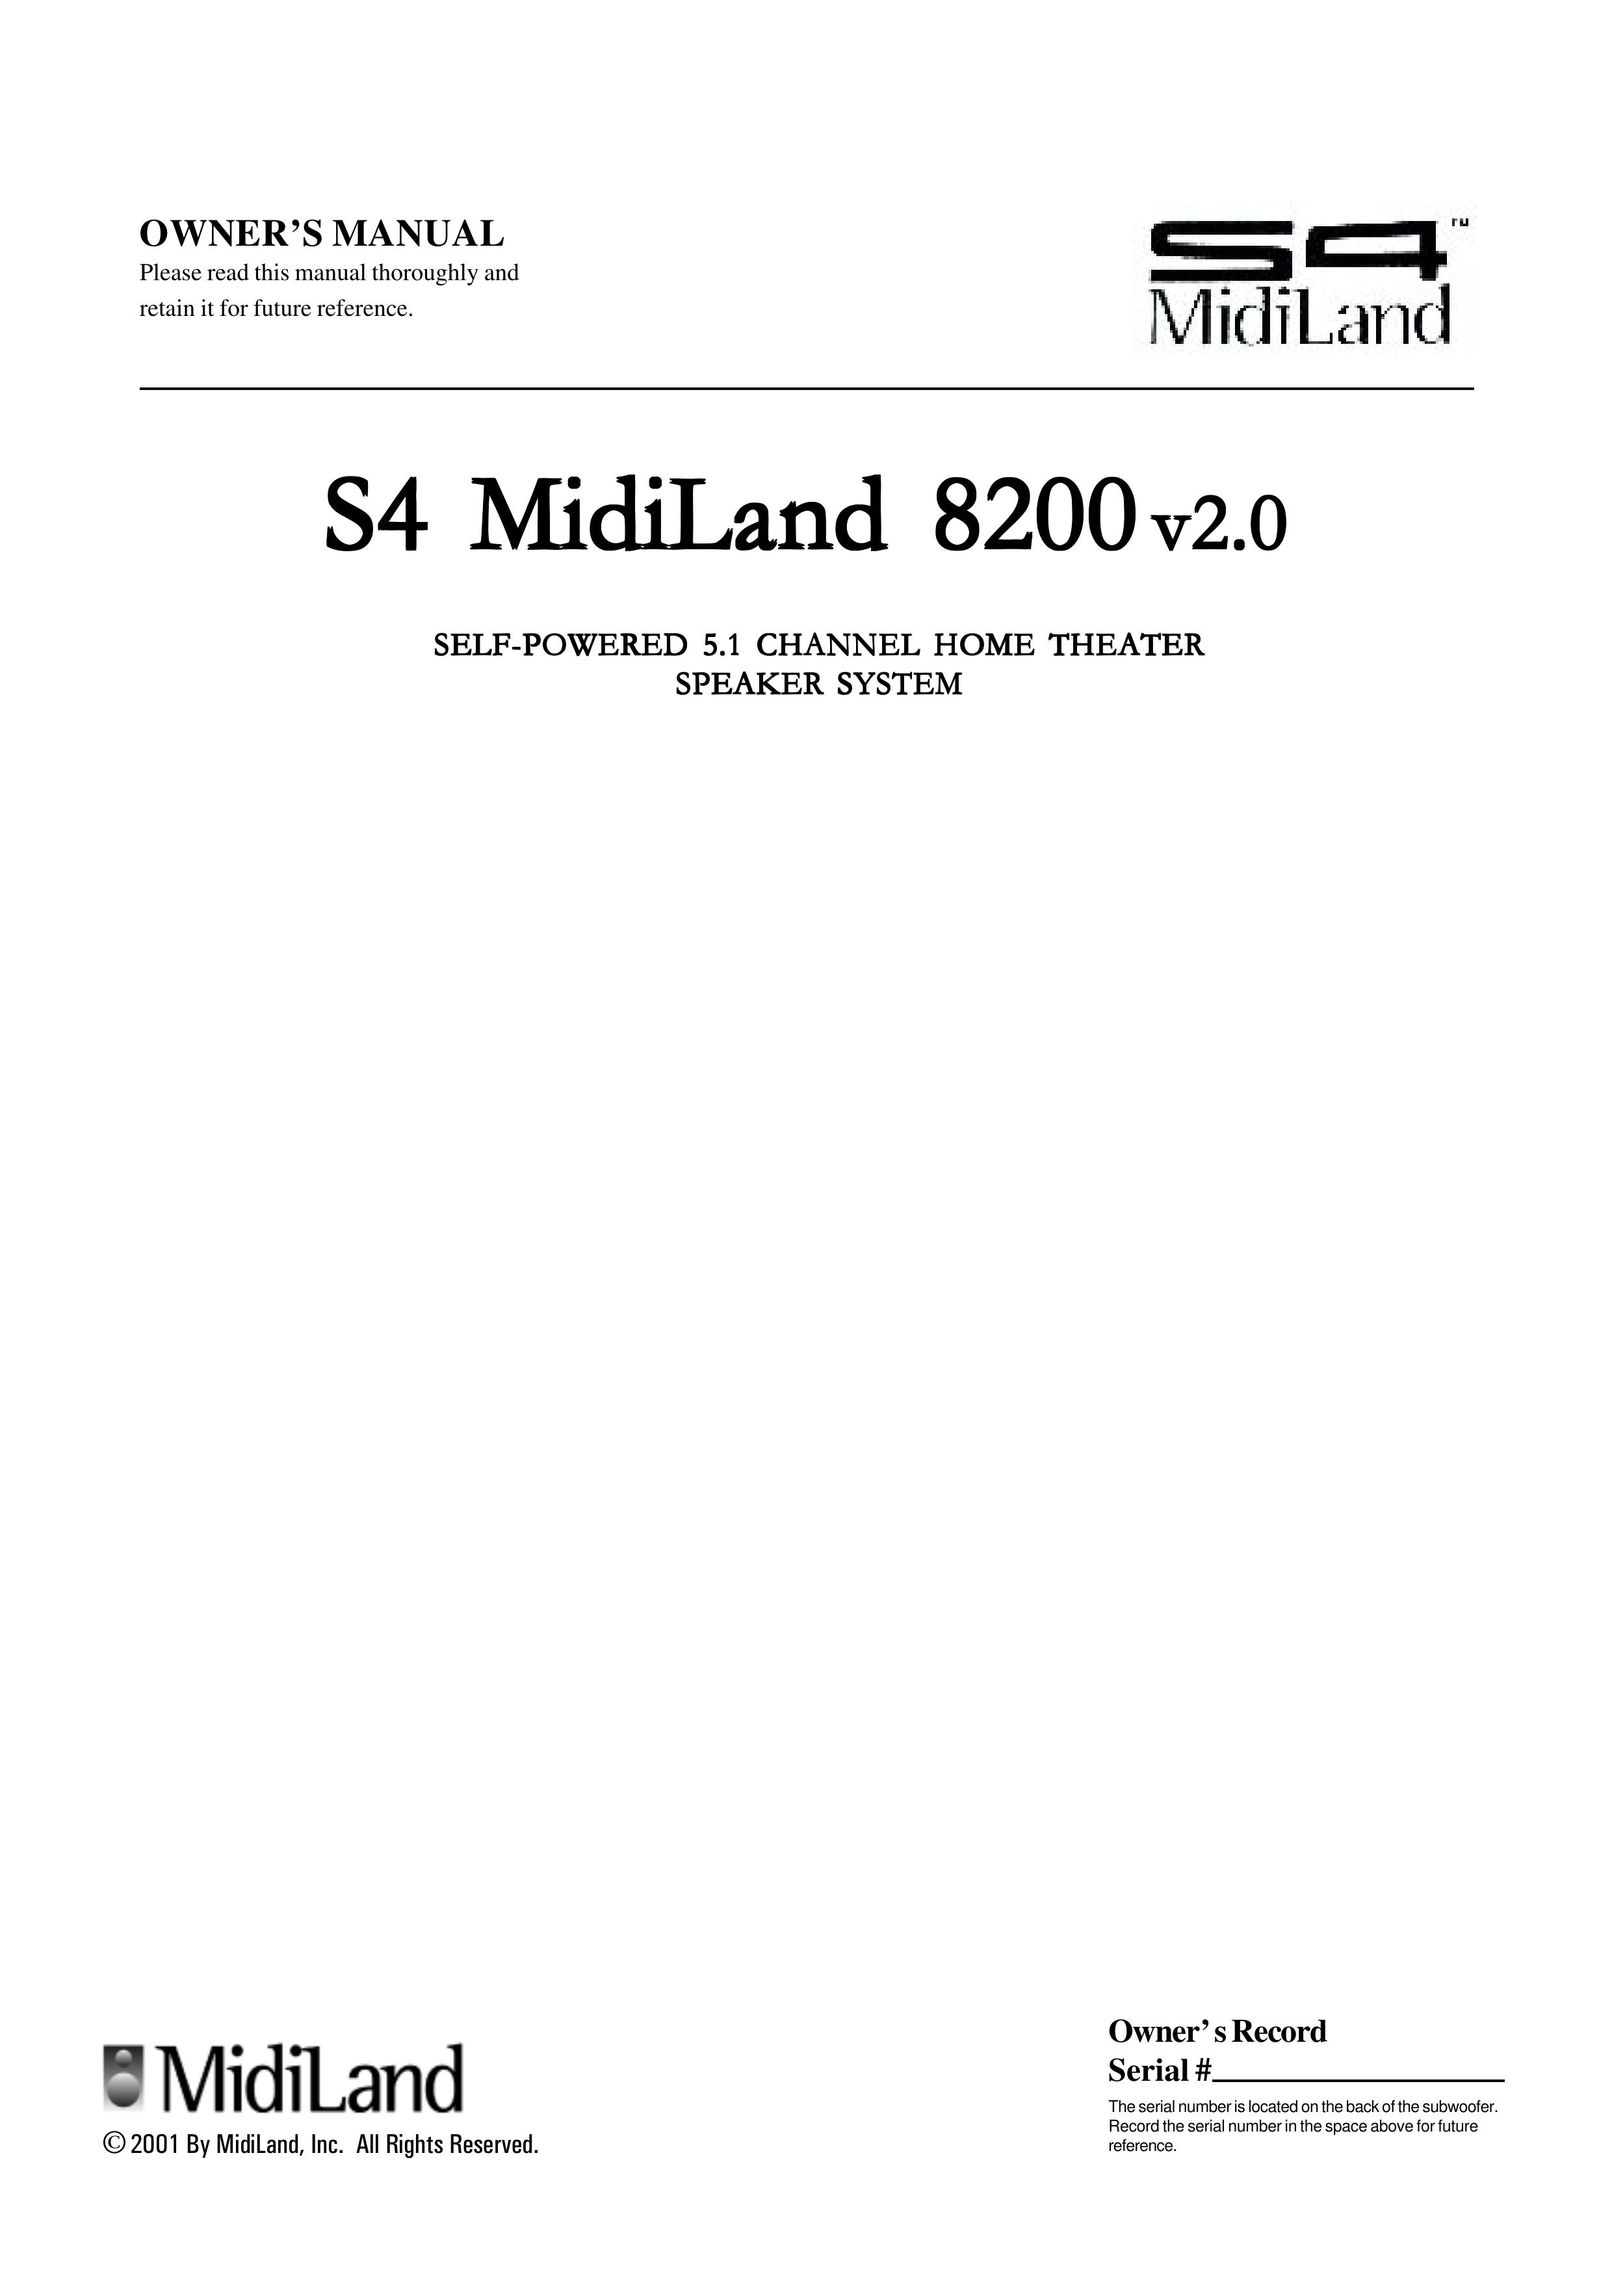 MidiLand 8200 Speaker System User Manual